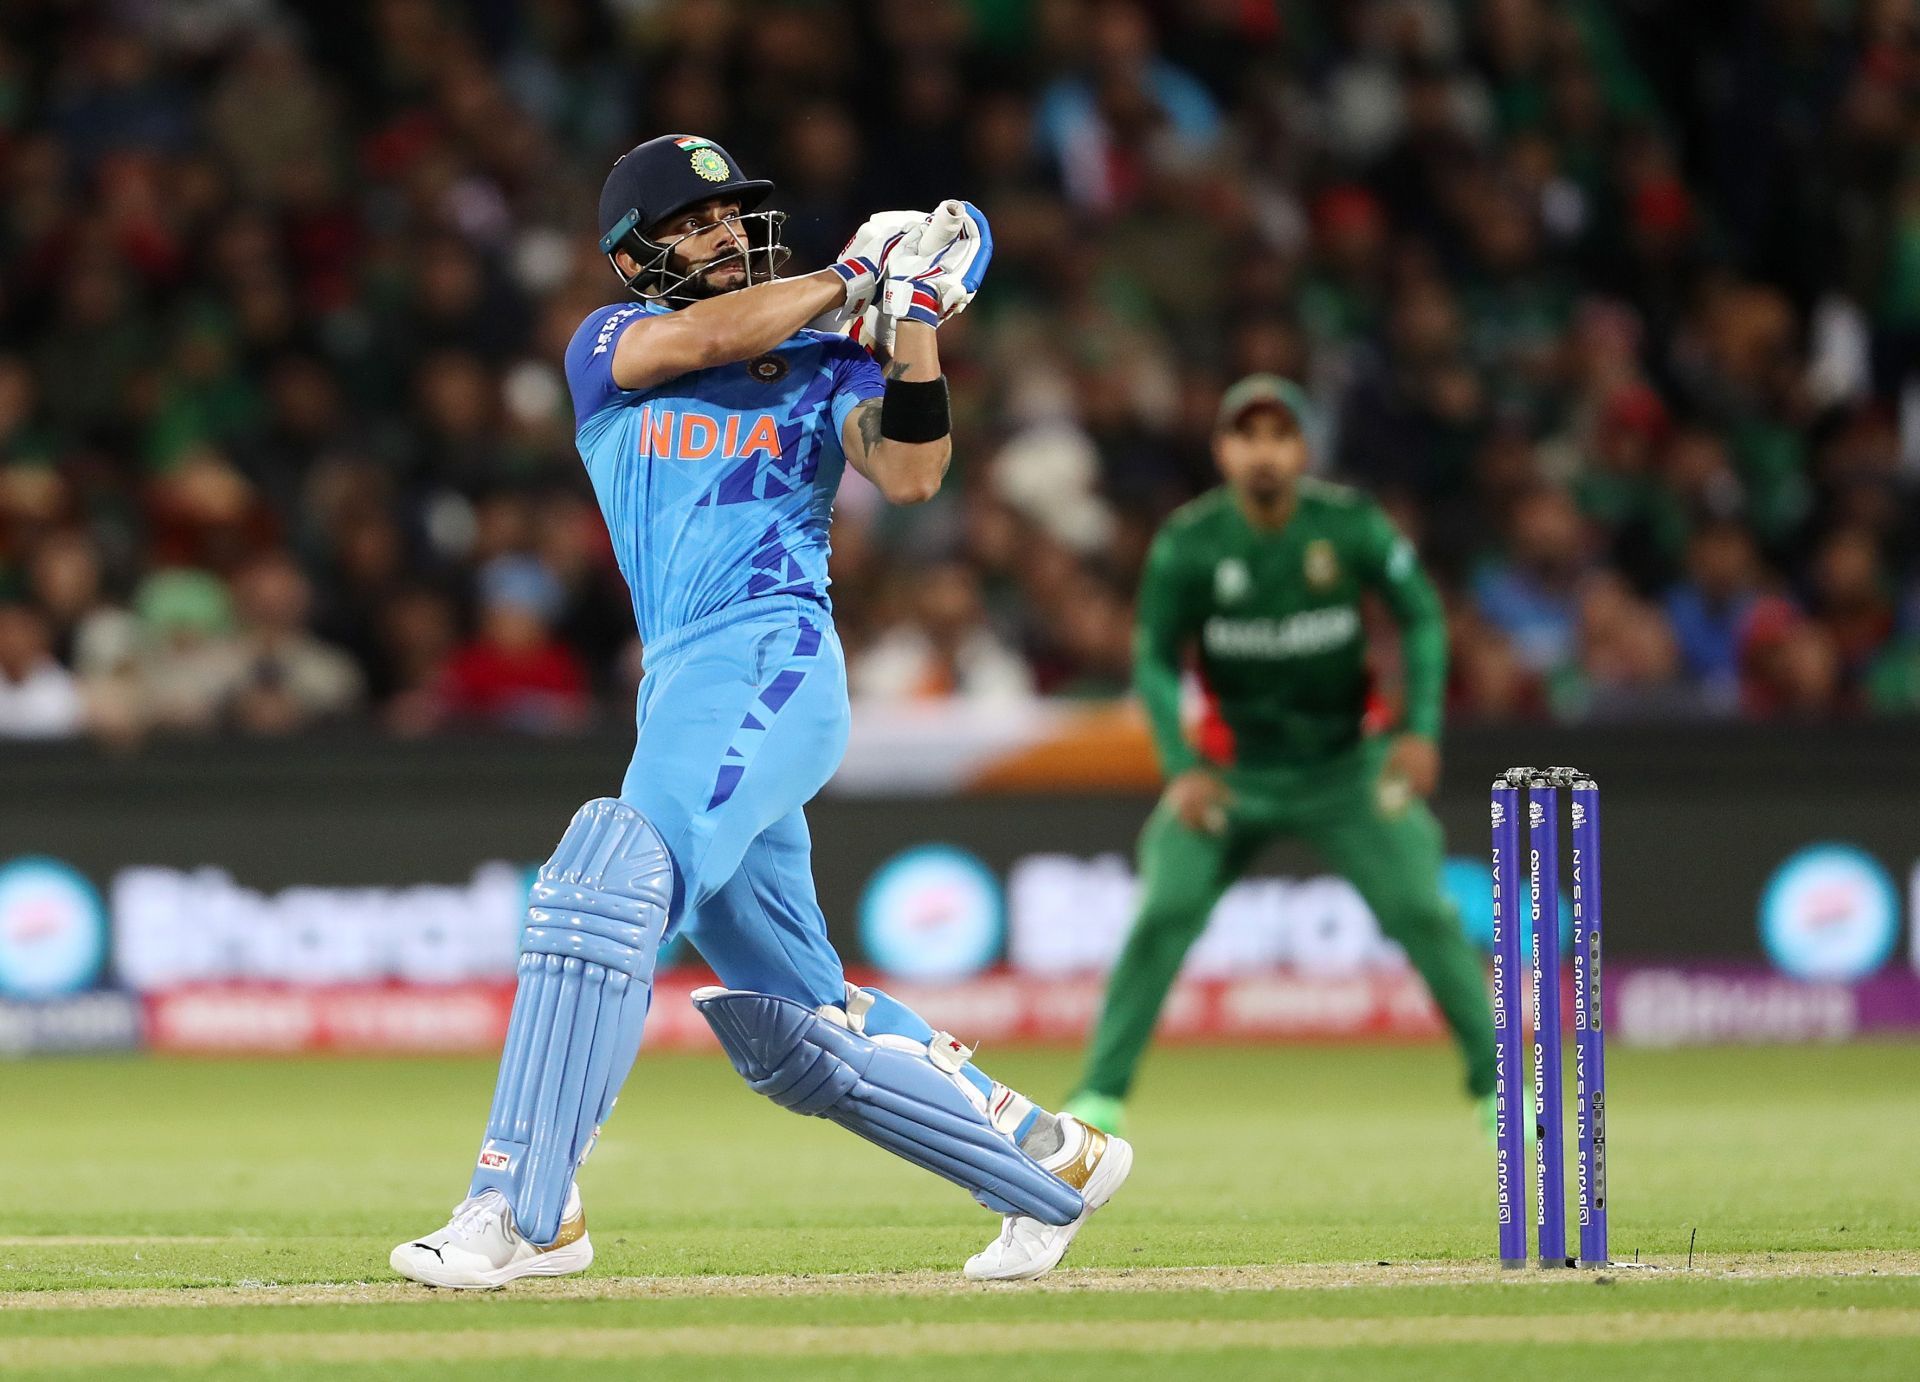 Virat Kohli top-scored for India with an unbeaten 64.